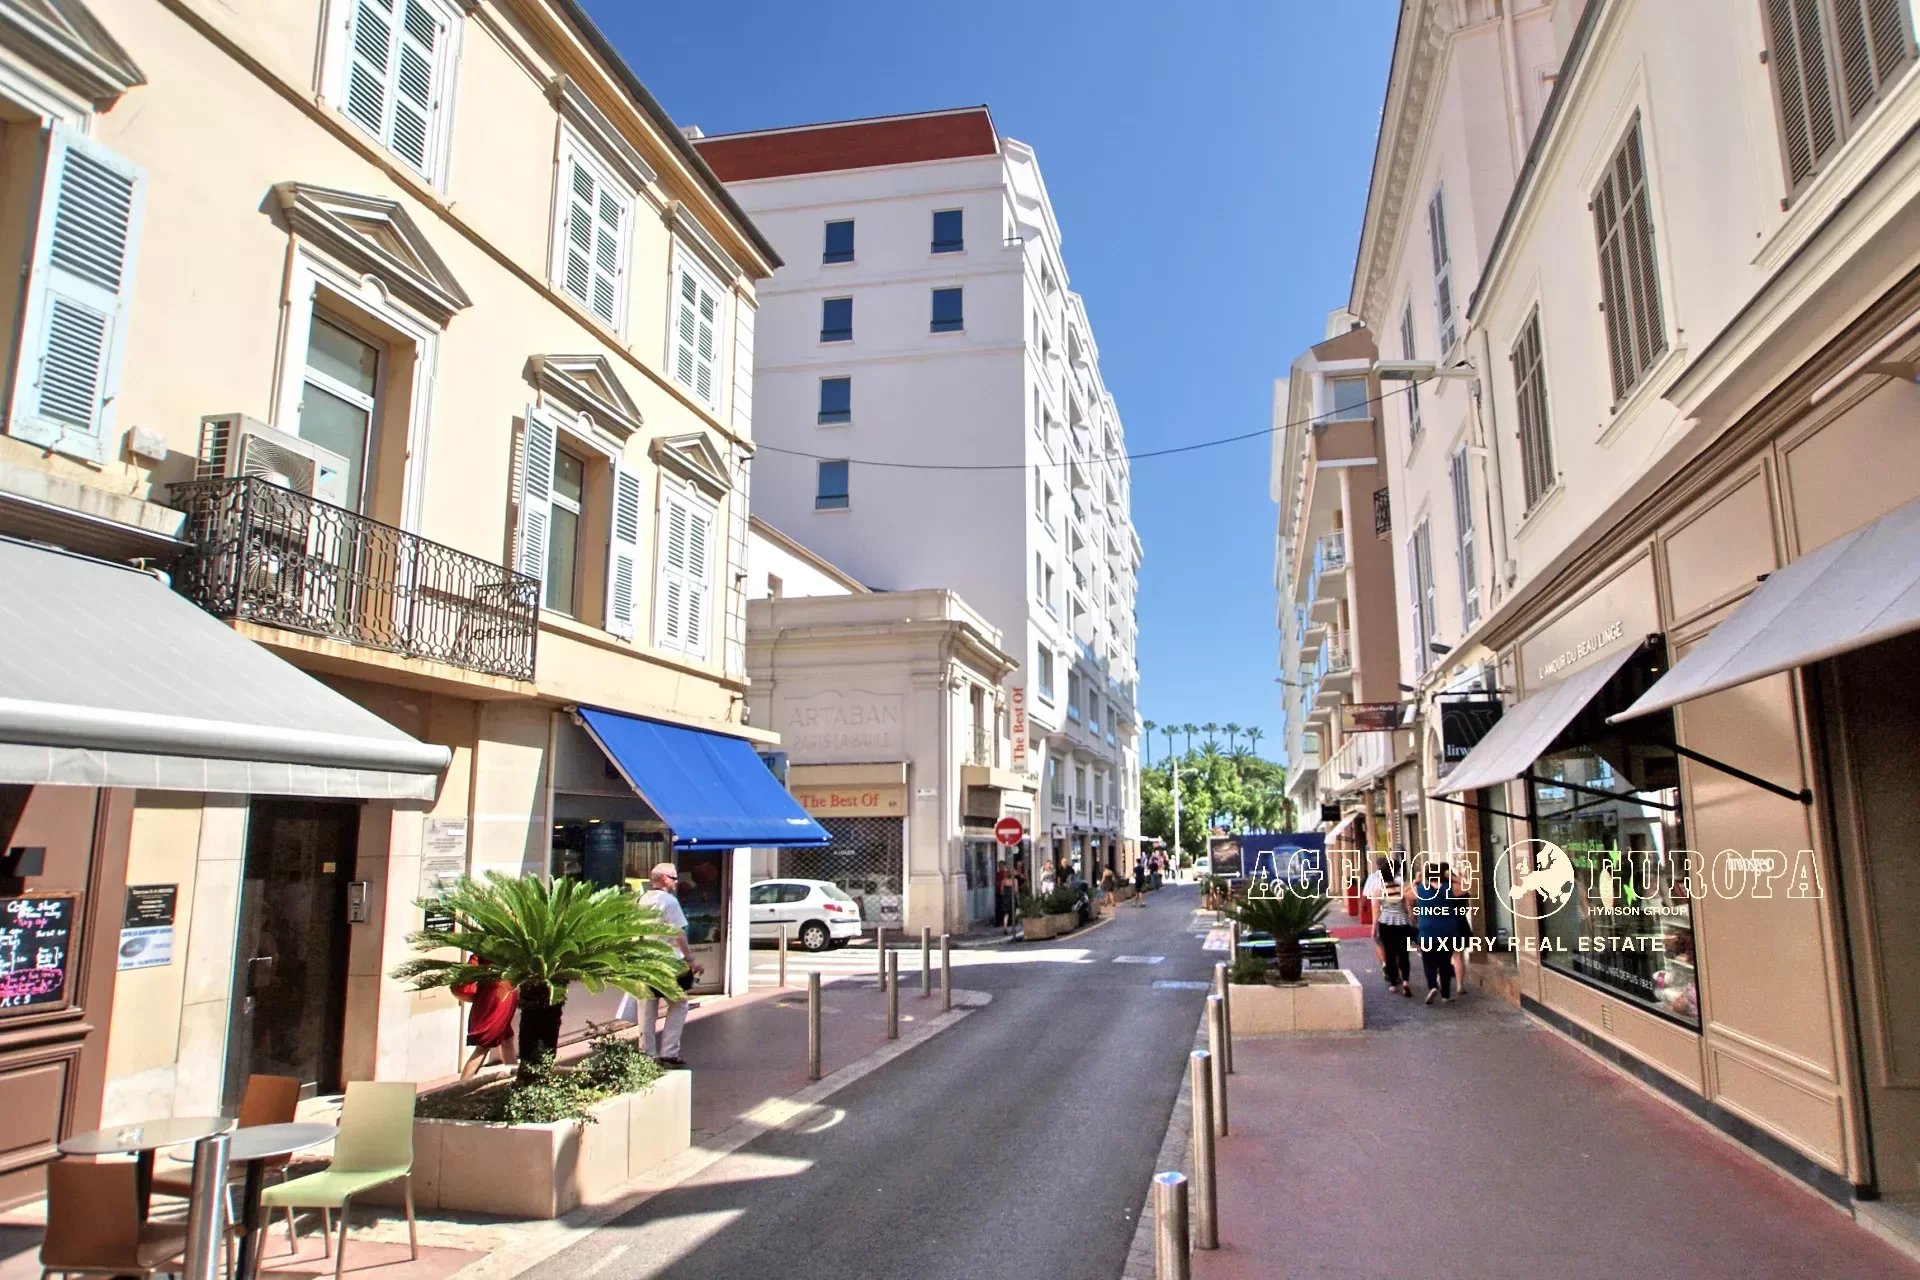 Vente Fond / Commerce à Cannes (06400) - Agence Europa